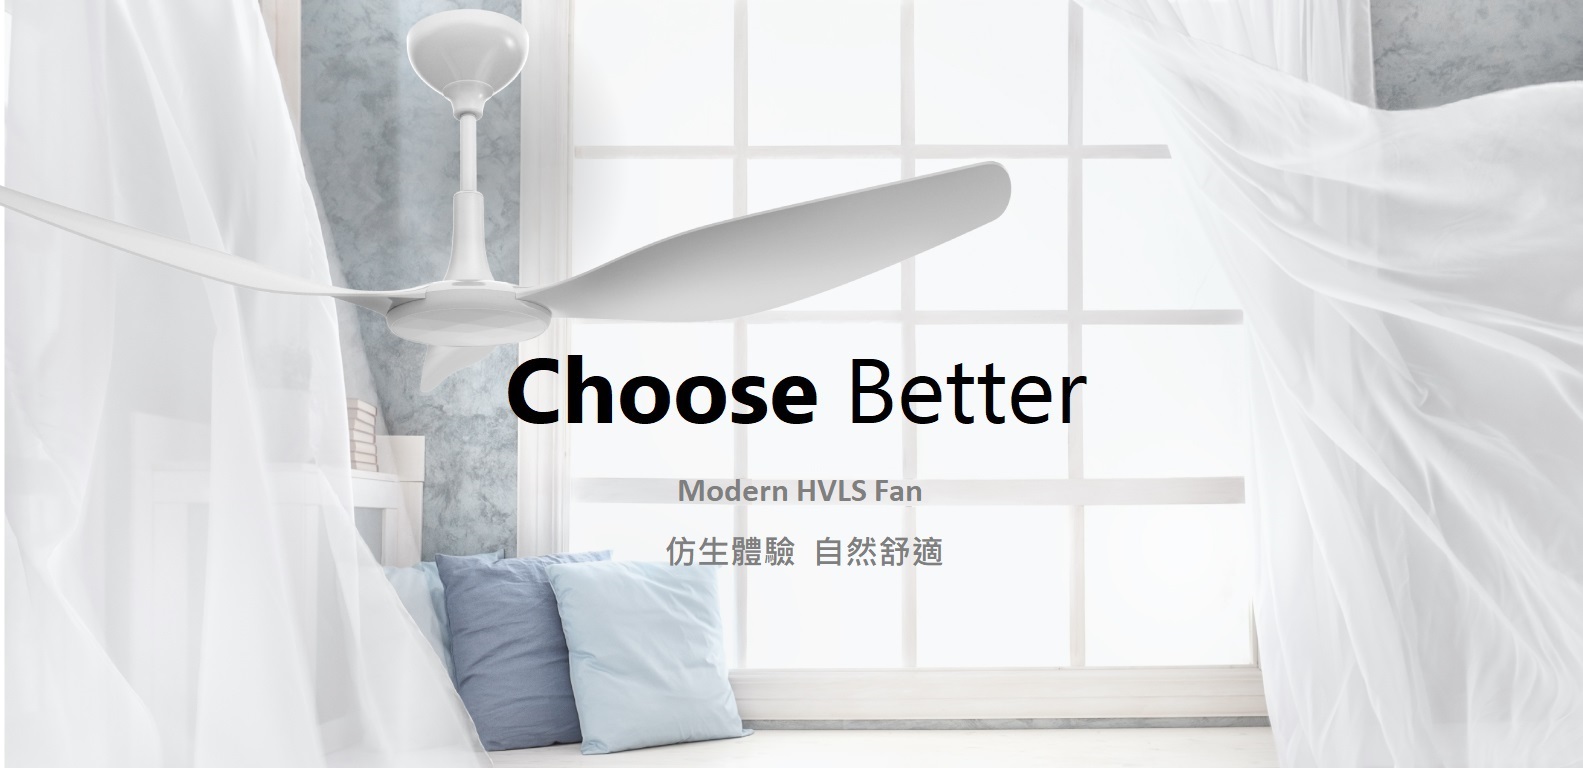 Choose BetterModern HVLS Fan仿生體驗 自然舒適